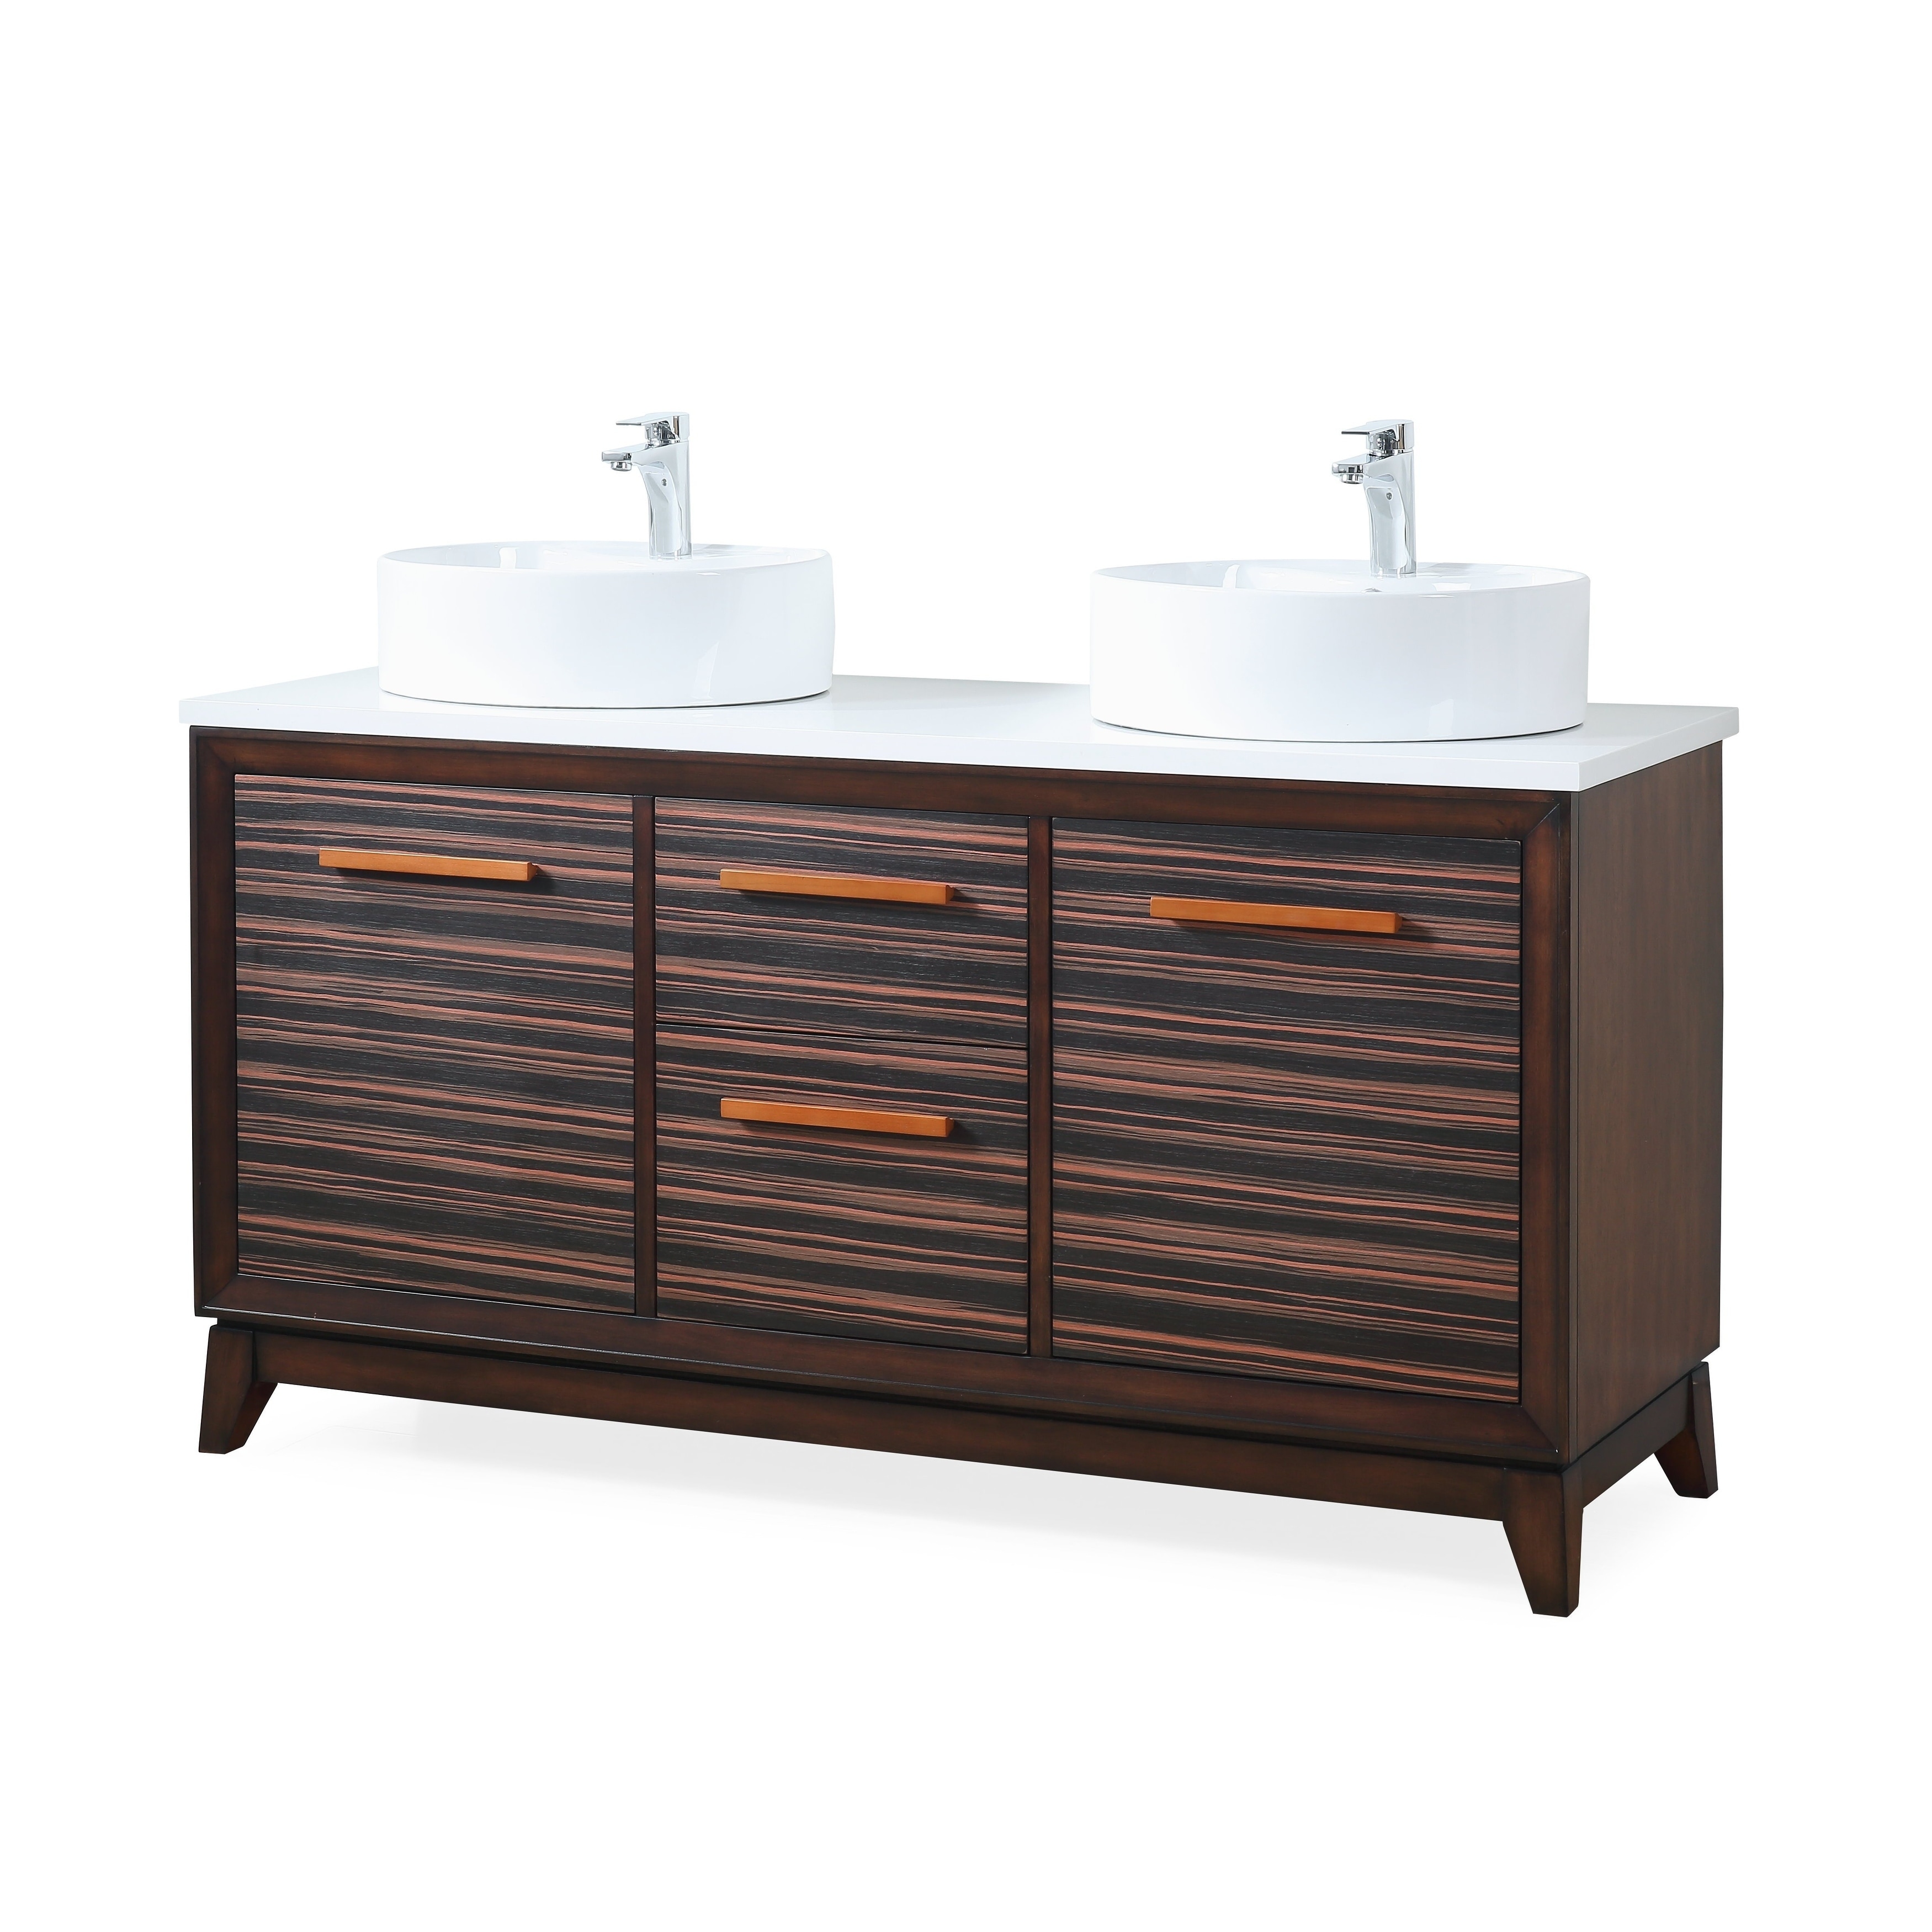 63 Tennnat Brand Arturo Double Sink Art Deco Bathroom Vanity